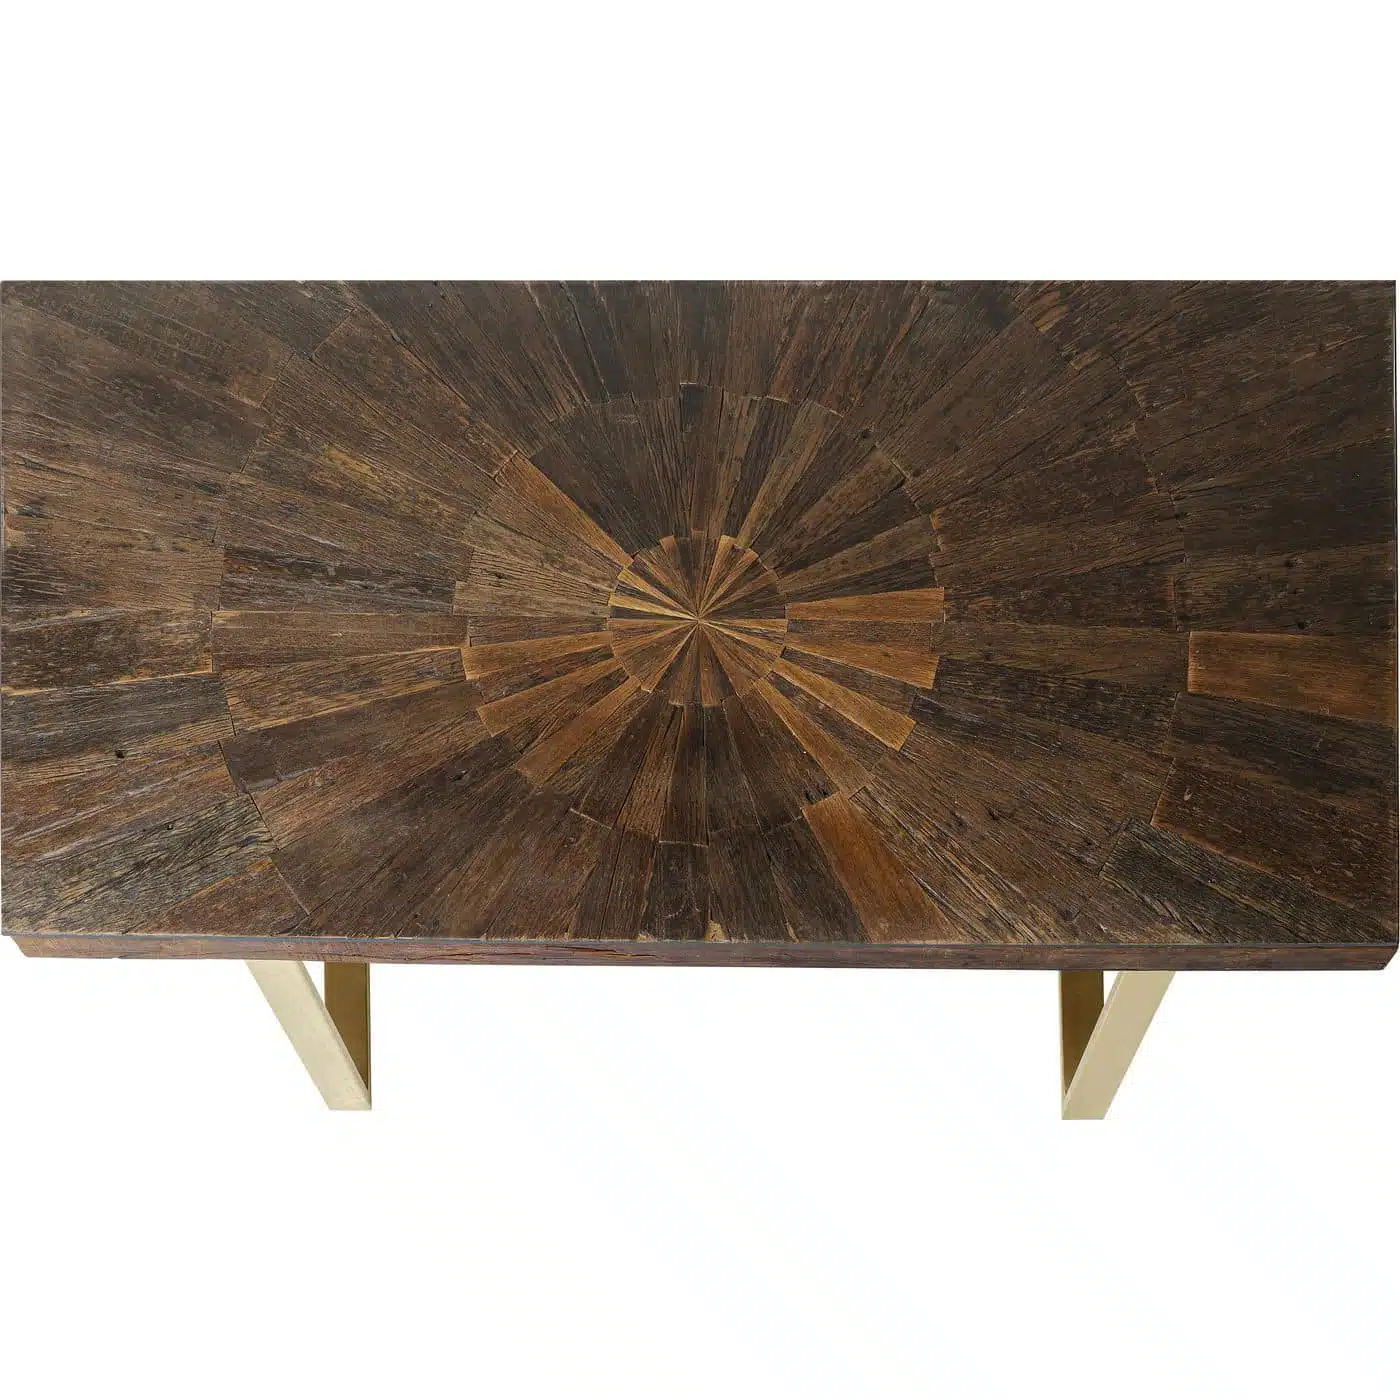 Table Conley 180x90cm pieds laiton Kare Design